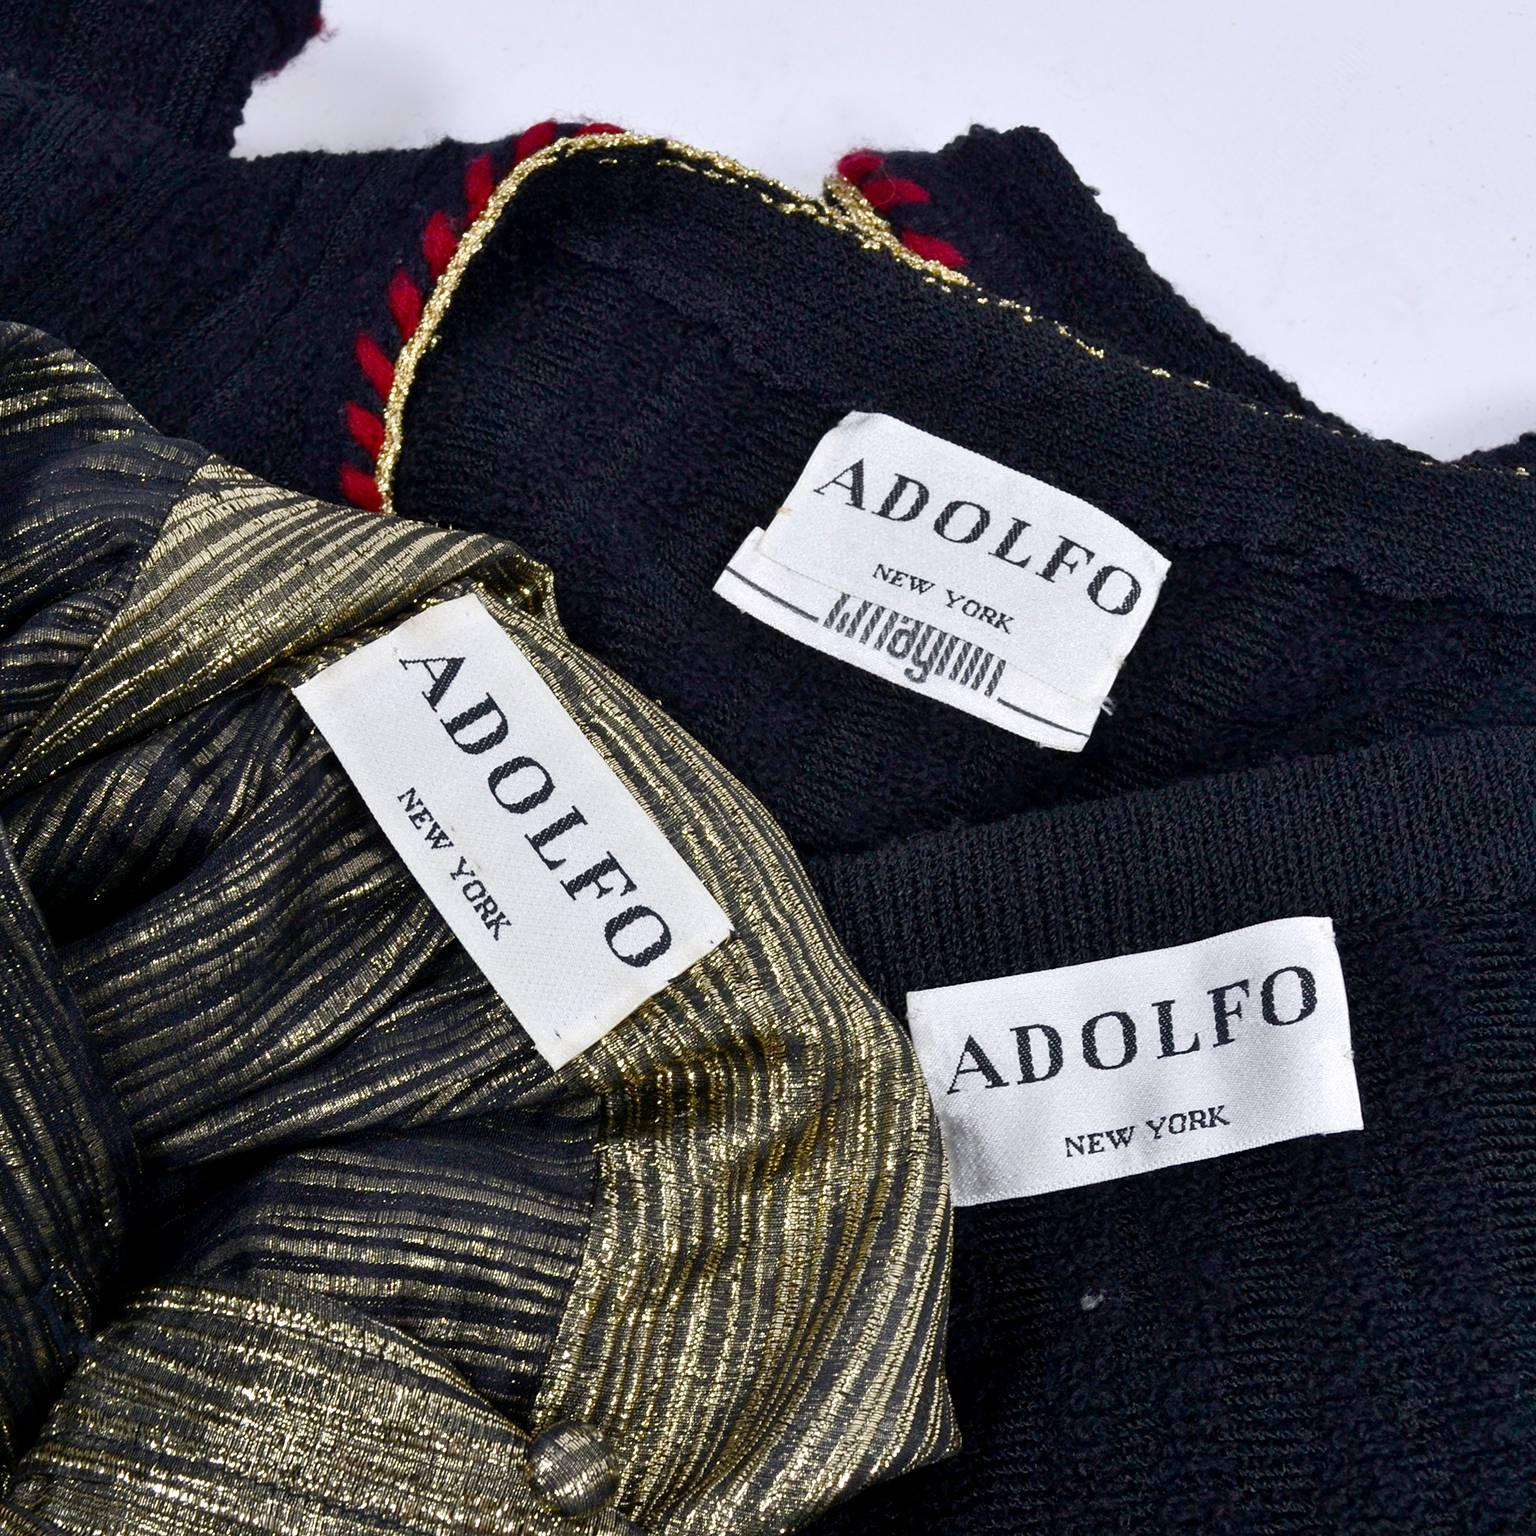 Adolfo Black Wool Boucle Suit With Red Trim & Gold Lamé Lurex Bow Blouse 3